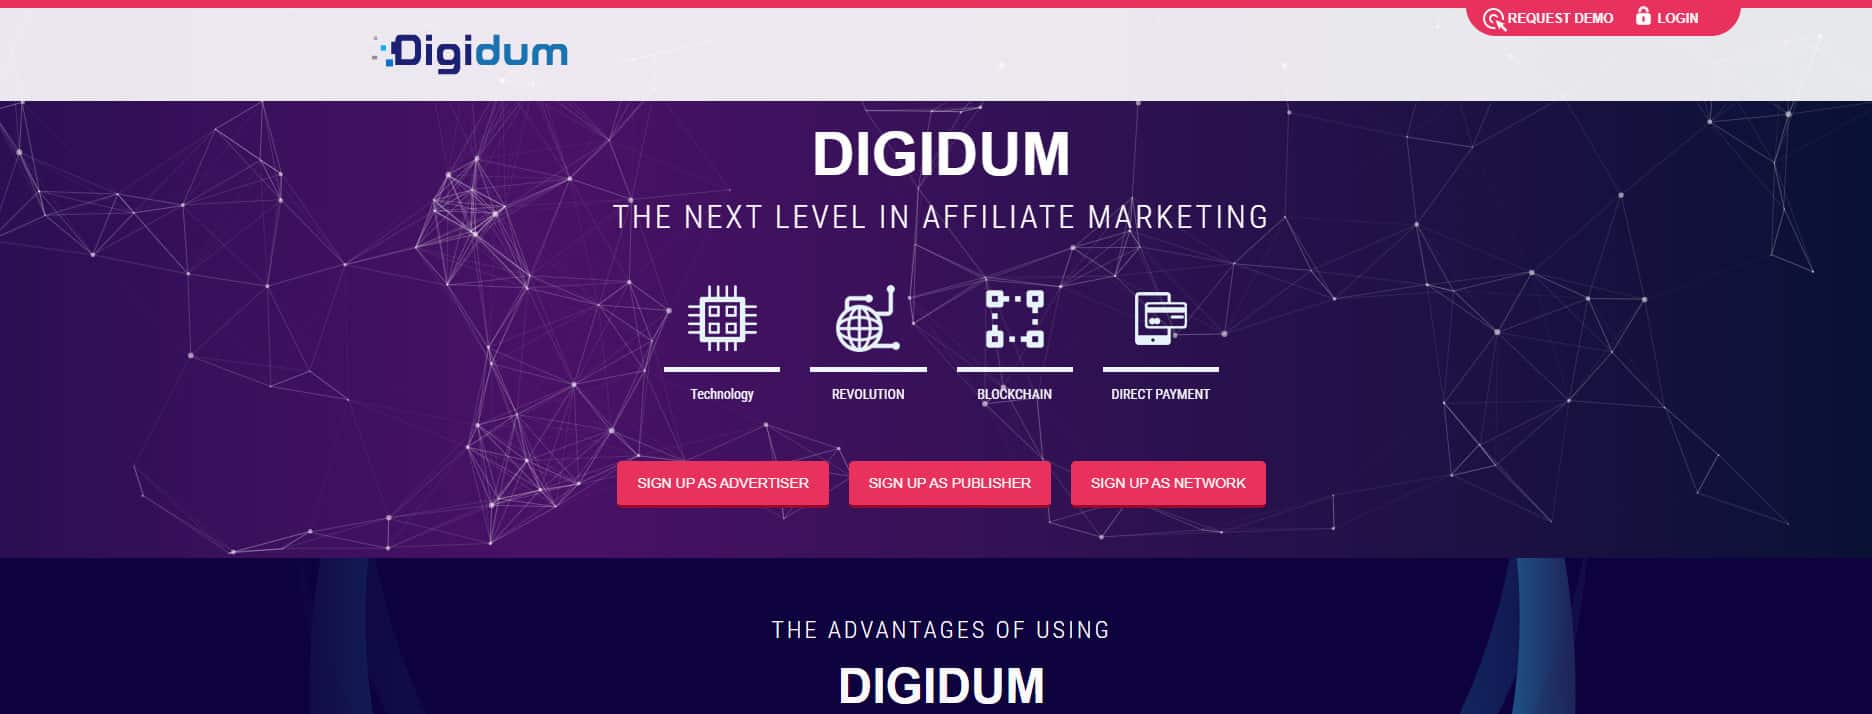 Digidum page